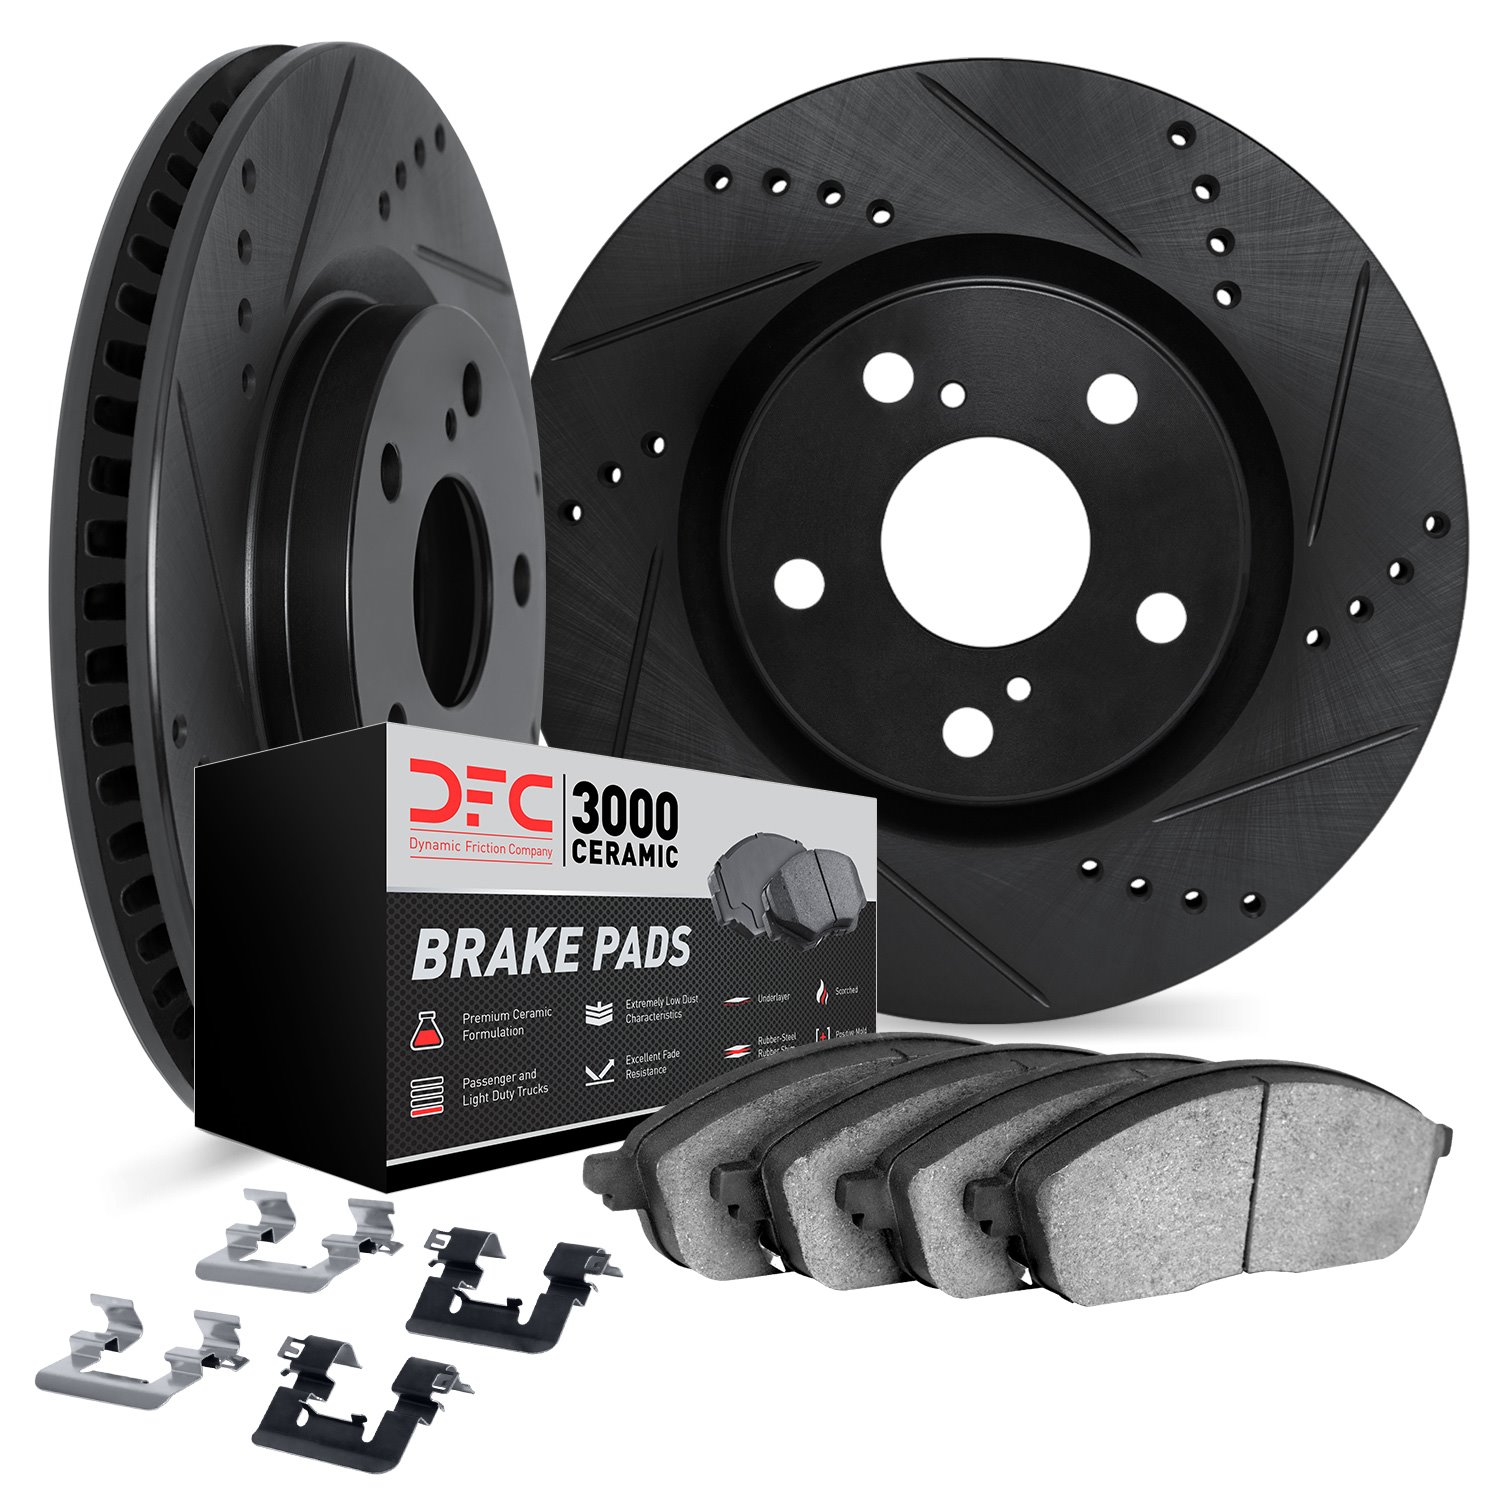 8312-10001 Drilled/Slotted Brake Rotors with 3000-Series Ceramic Brake Pads Kit & Hardware [Black], Fits Select Kia/Hyundai/Gene